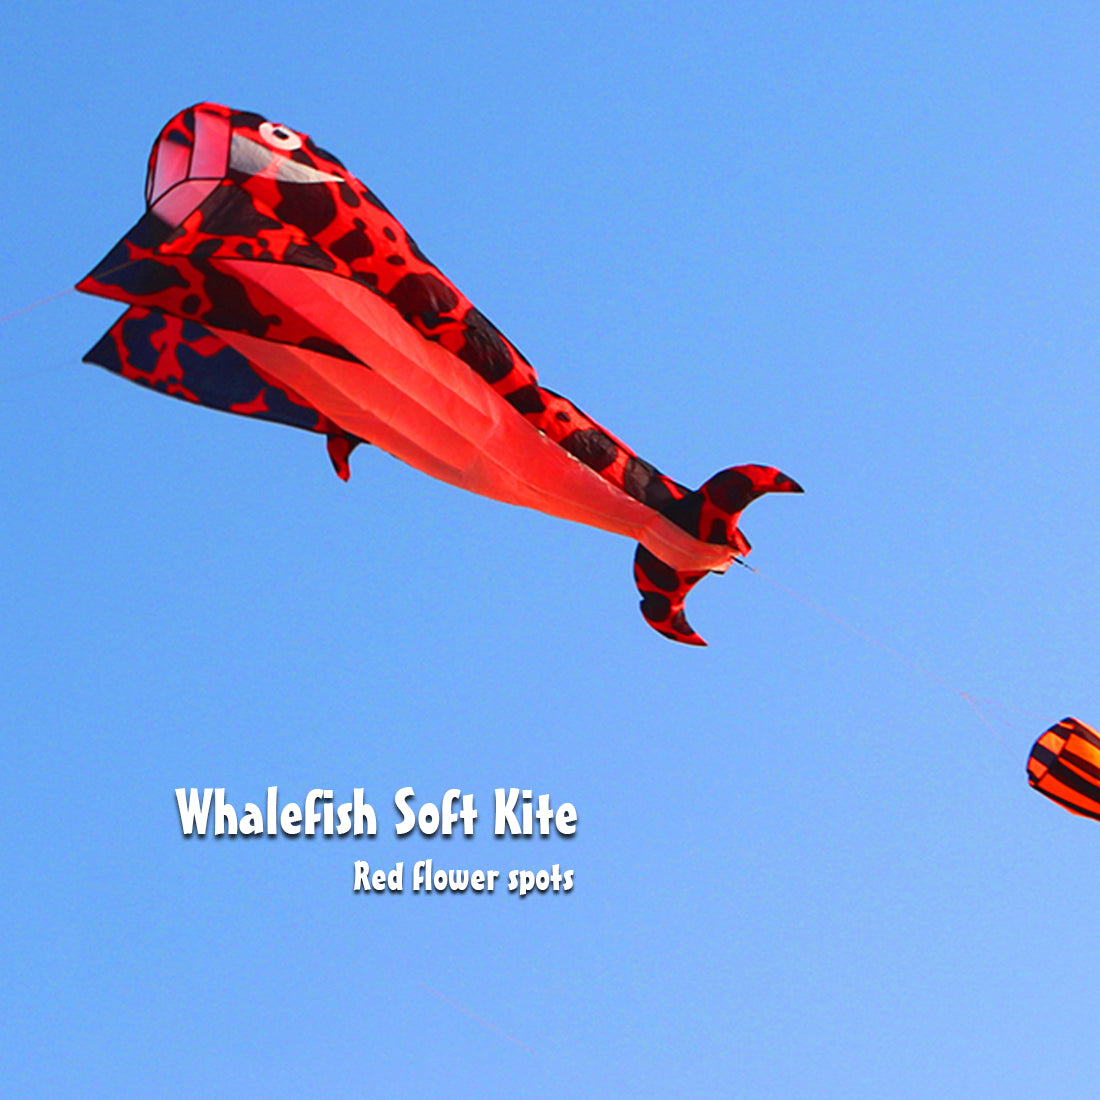 3D Dolphin Software Kite Single Line Kites